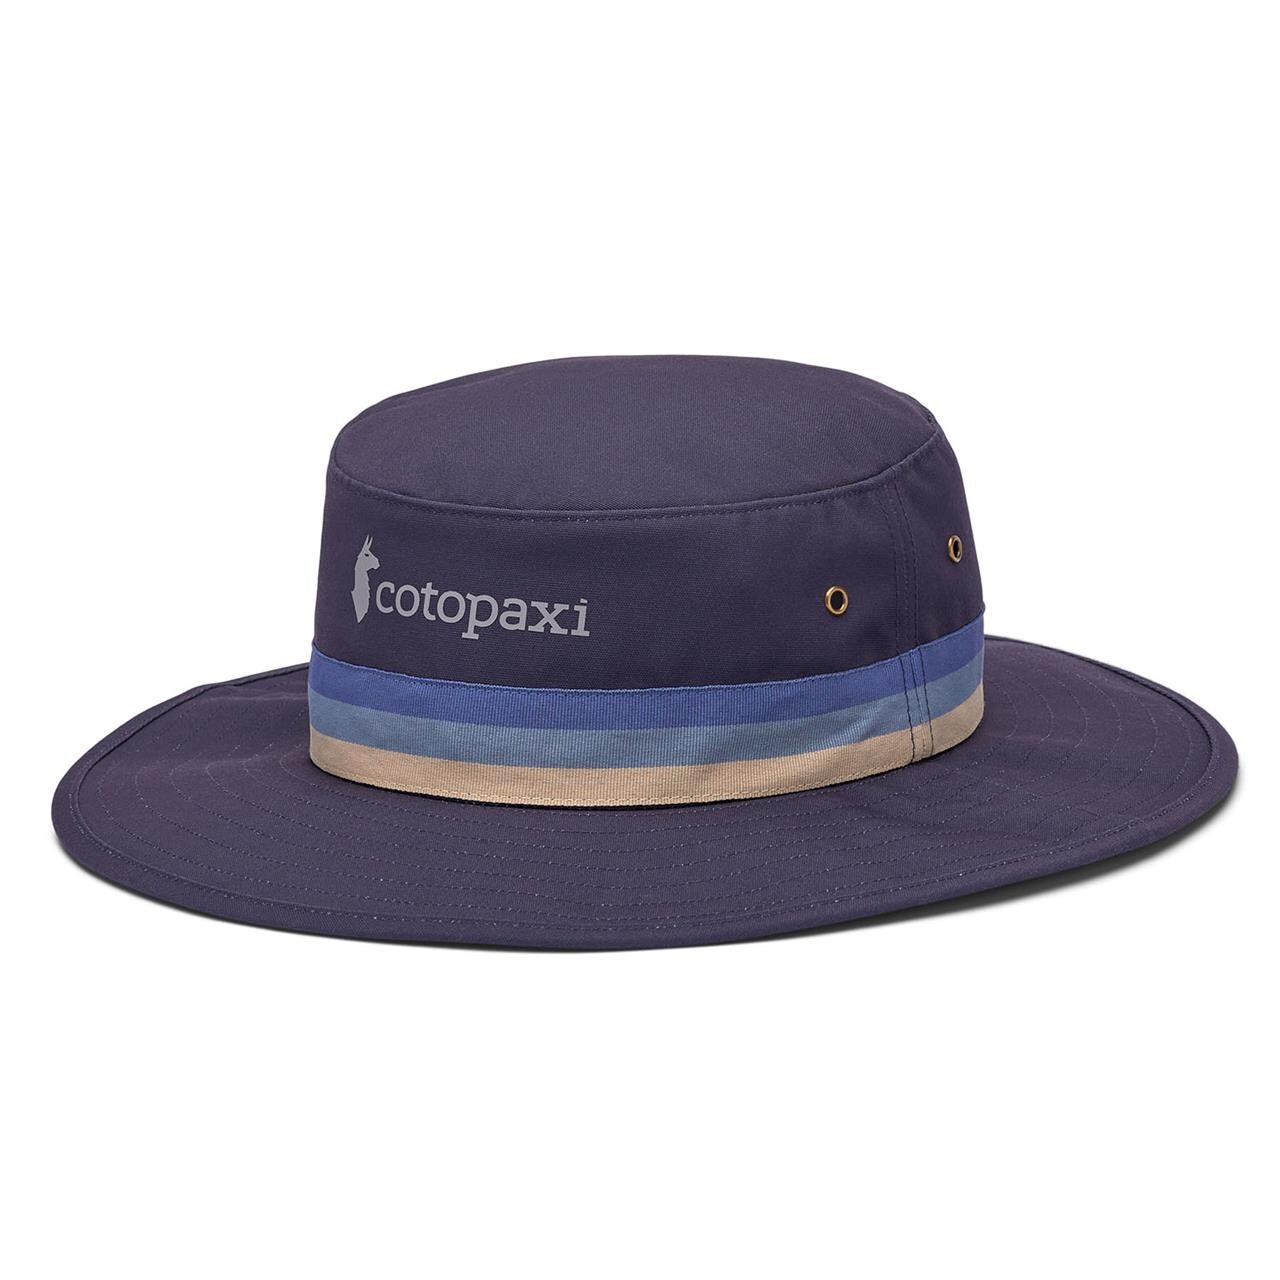 Se Cotopaxi Orilla Sun Hat (Grå (GRAPHITE) One size) hos Friluftsland.dk